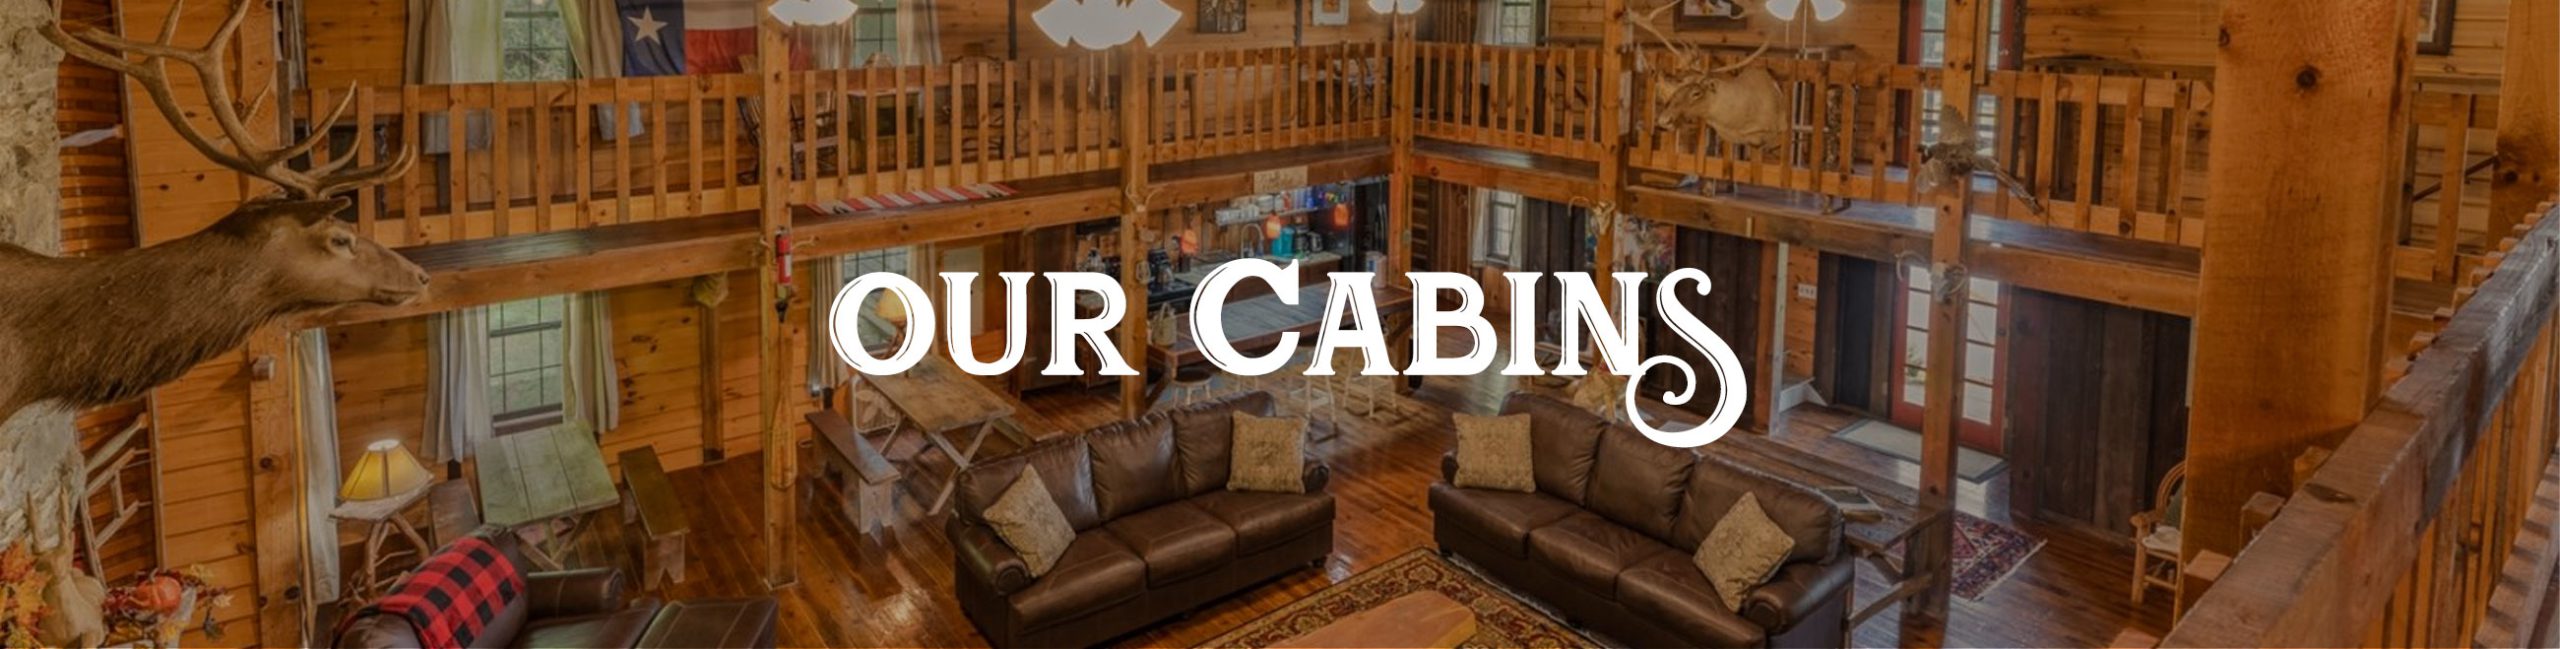 Deerwoode Reserve | Cabin logo featuring a log cabin image.